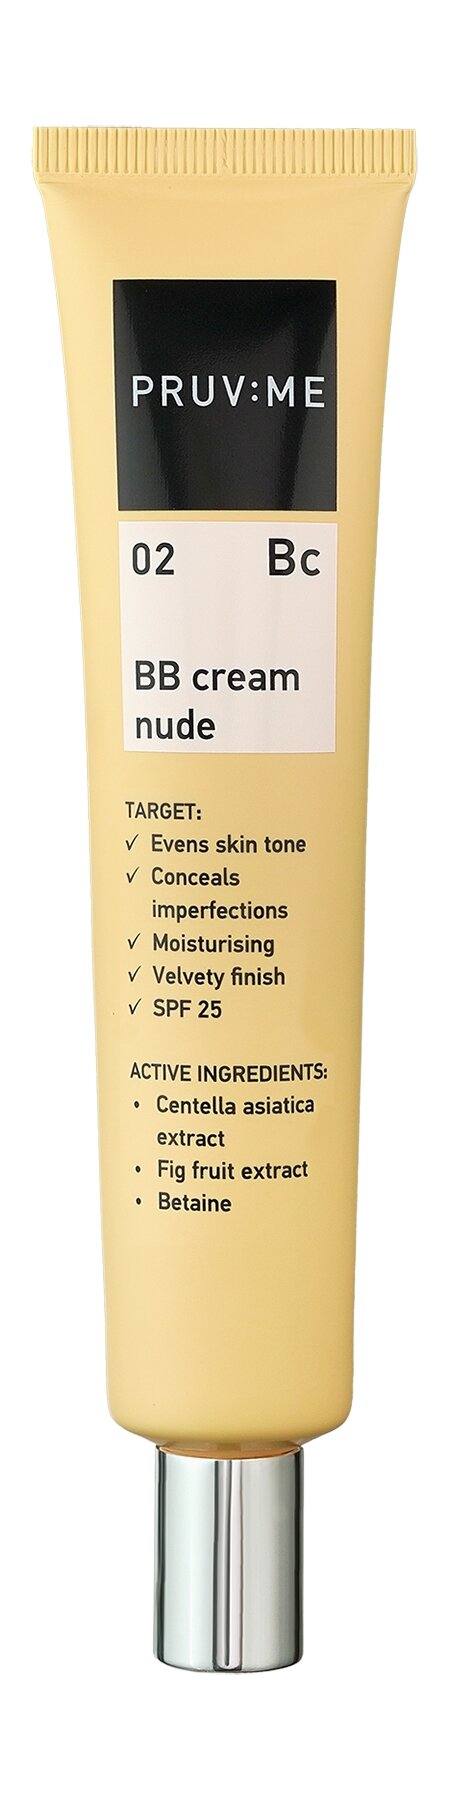 PRUV: ME Bc 02 BB Cream Nude ВВ Крем для лица SPF 25, 45 мл, 02 натурально-бежевый